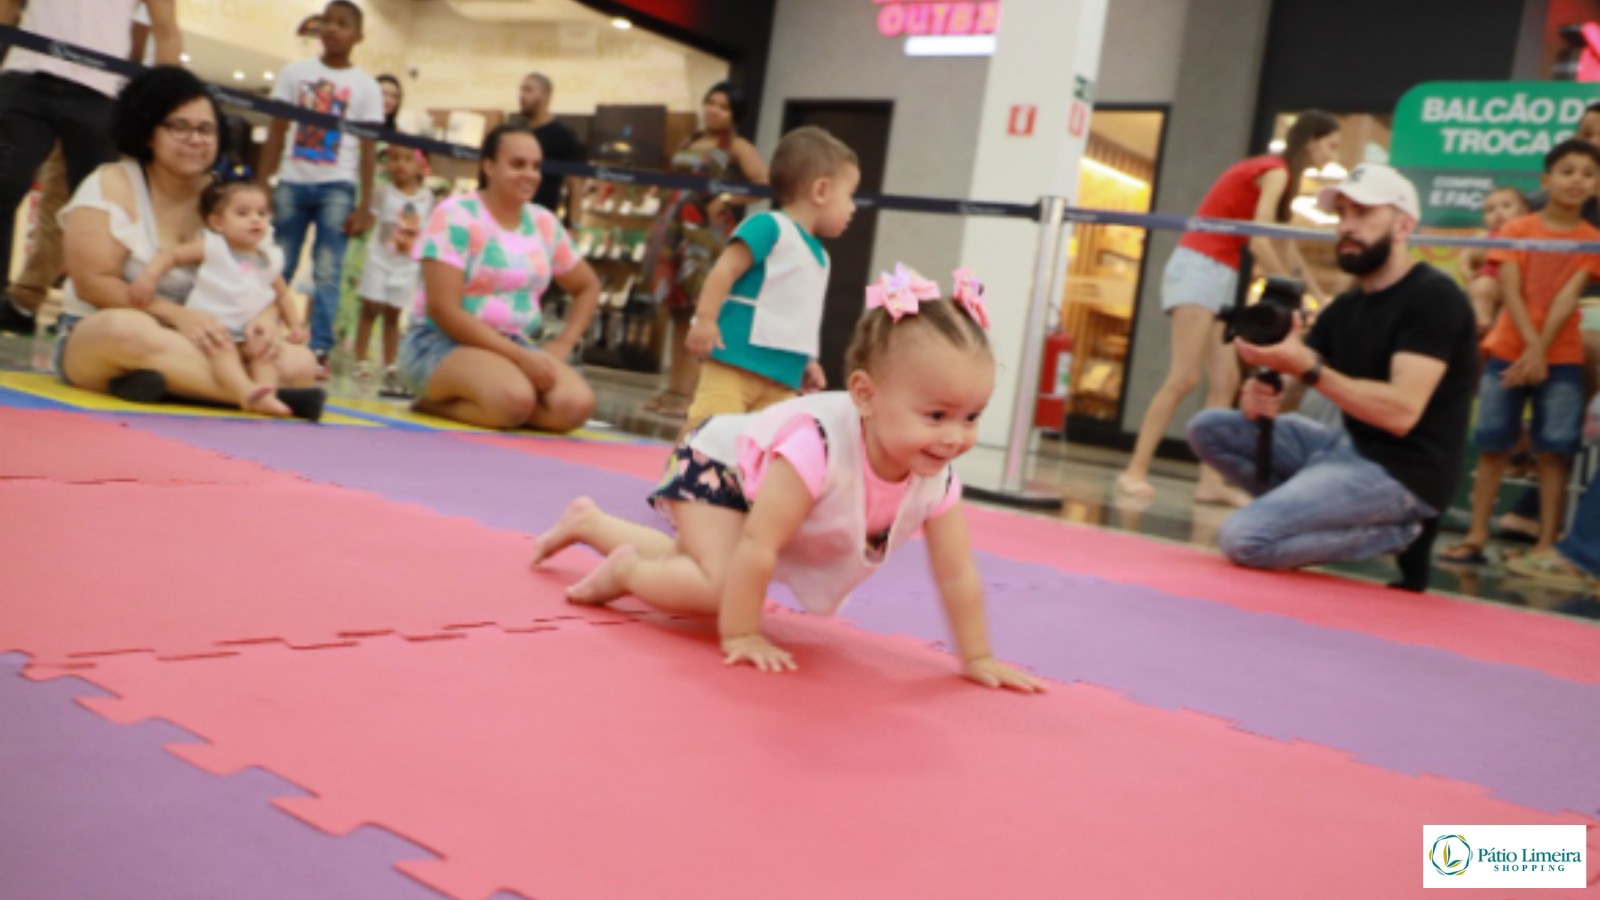 Pátio Limeira Shopping realiza Corrida de Bebês neste final de semana